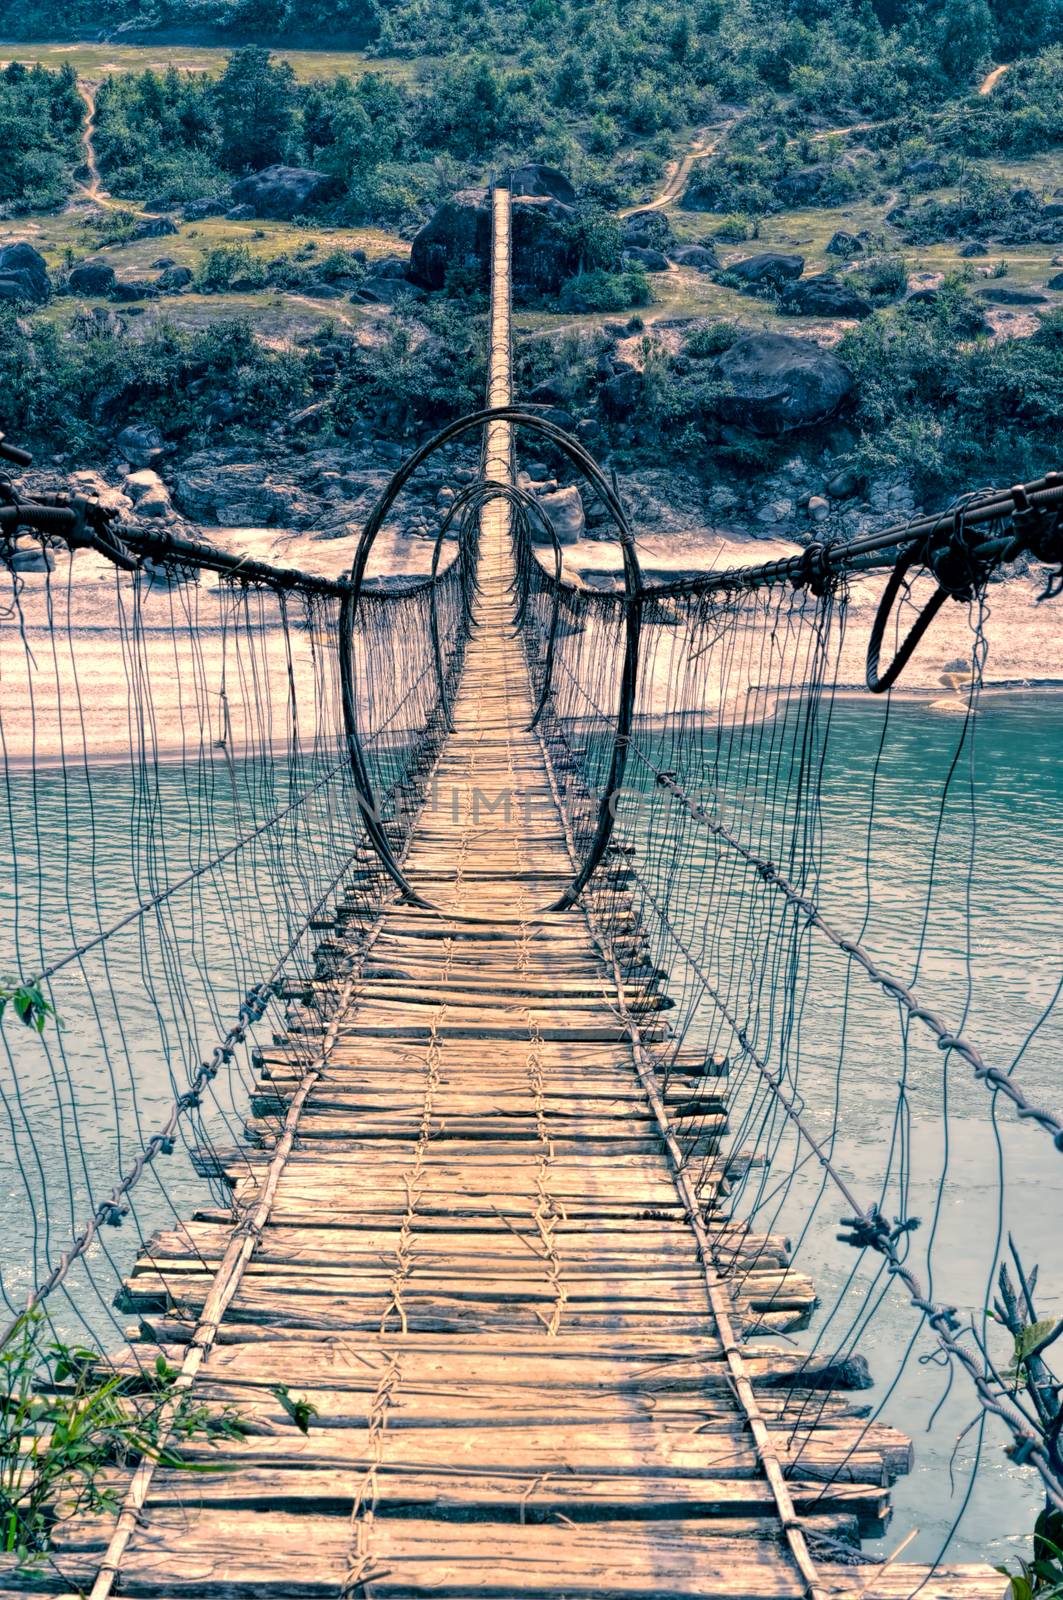 Scary footbridge by MichalKnitl